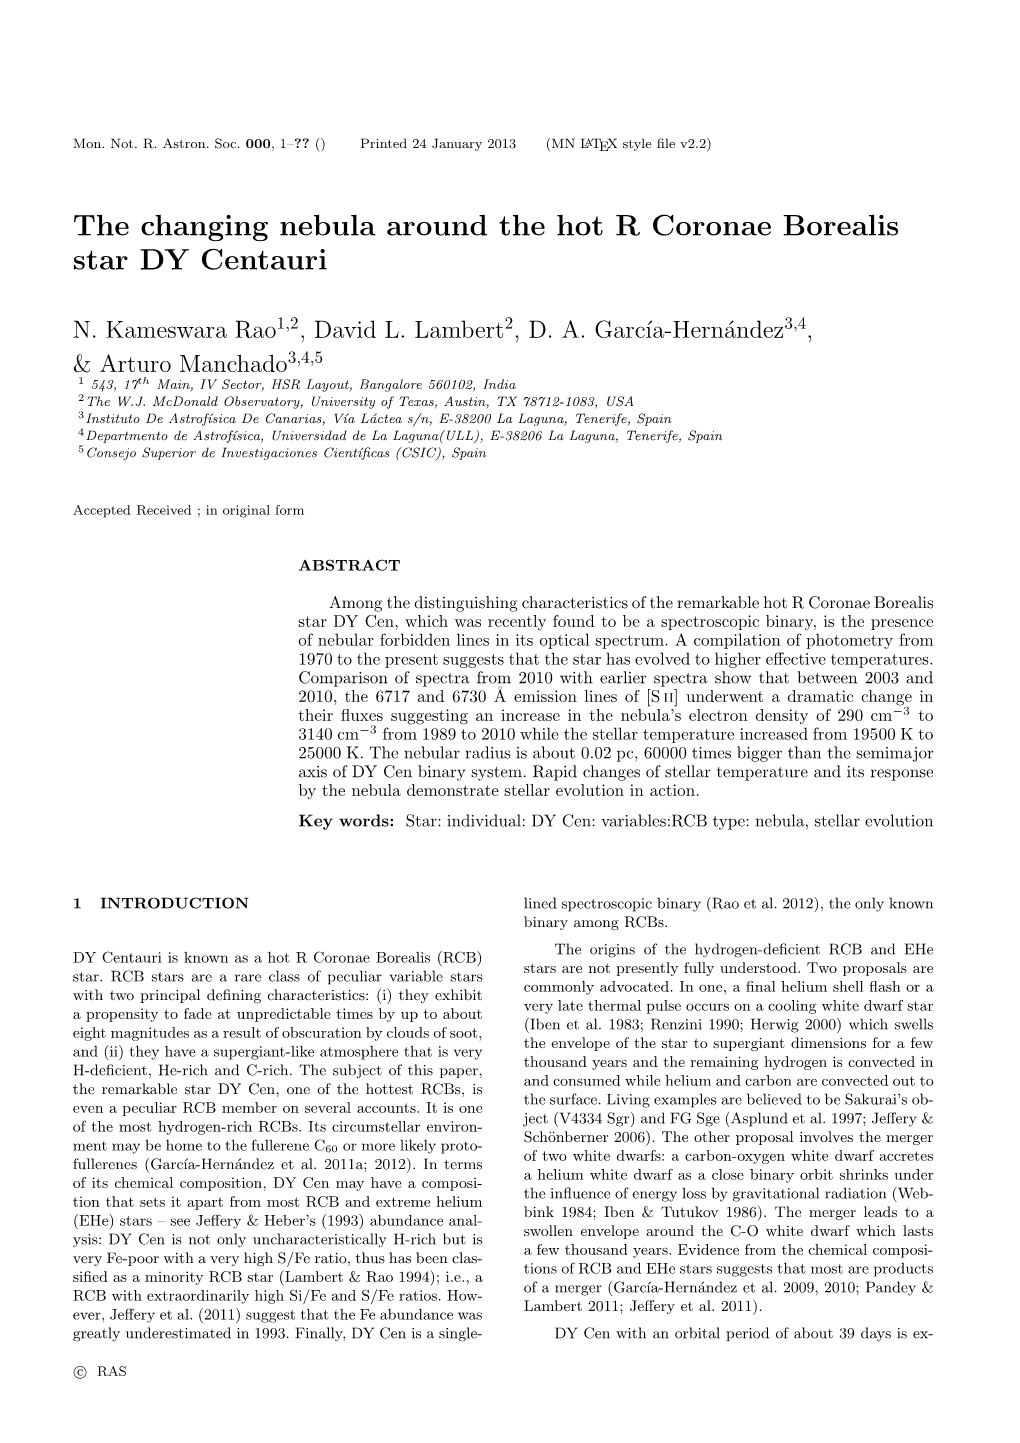 The Changing Nebula Around the Hot R Coronae Borealis Star DY Centauri